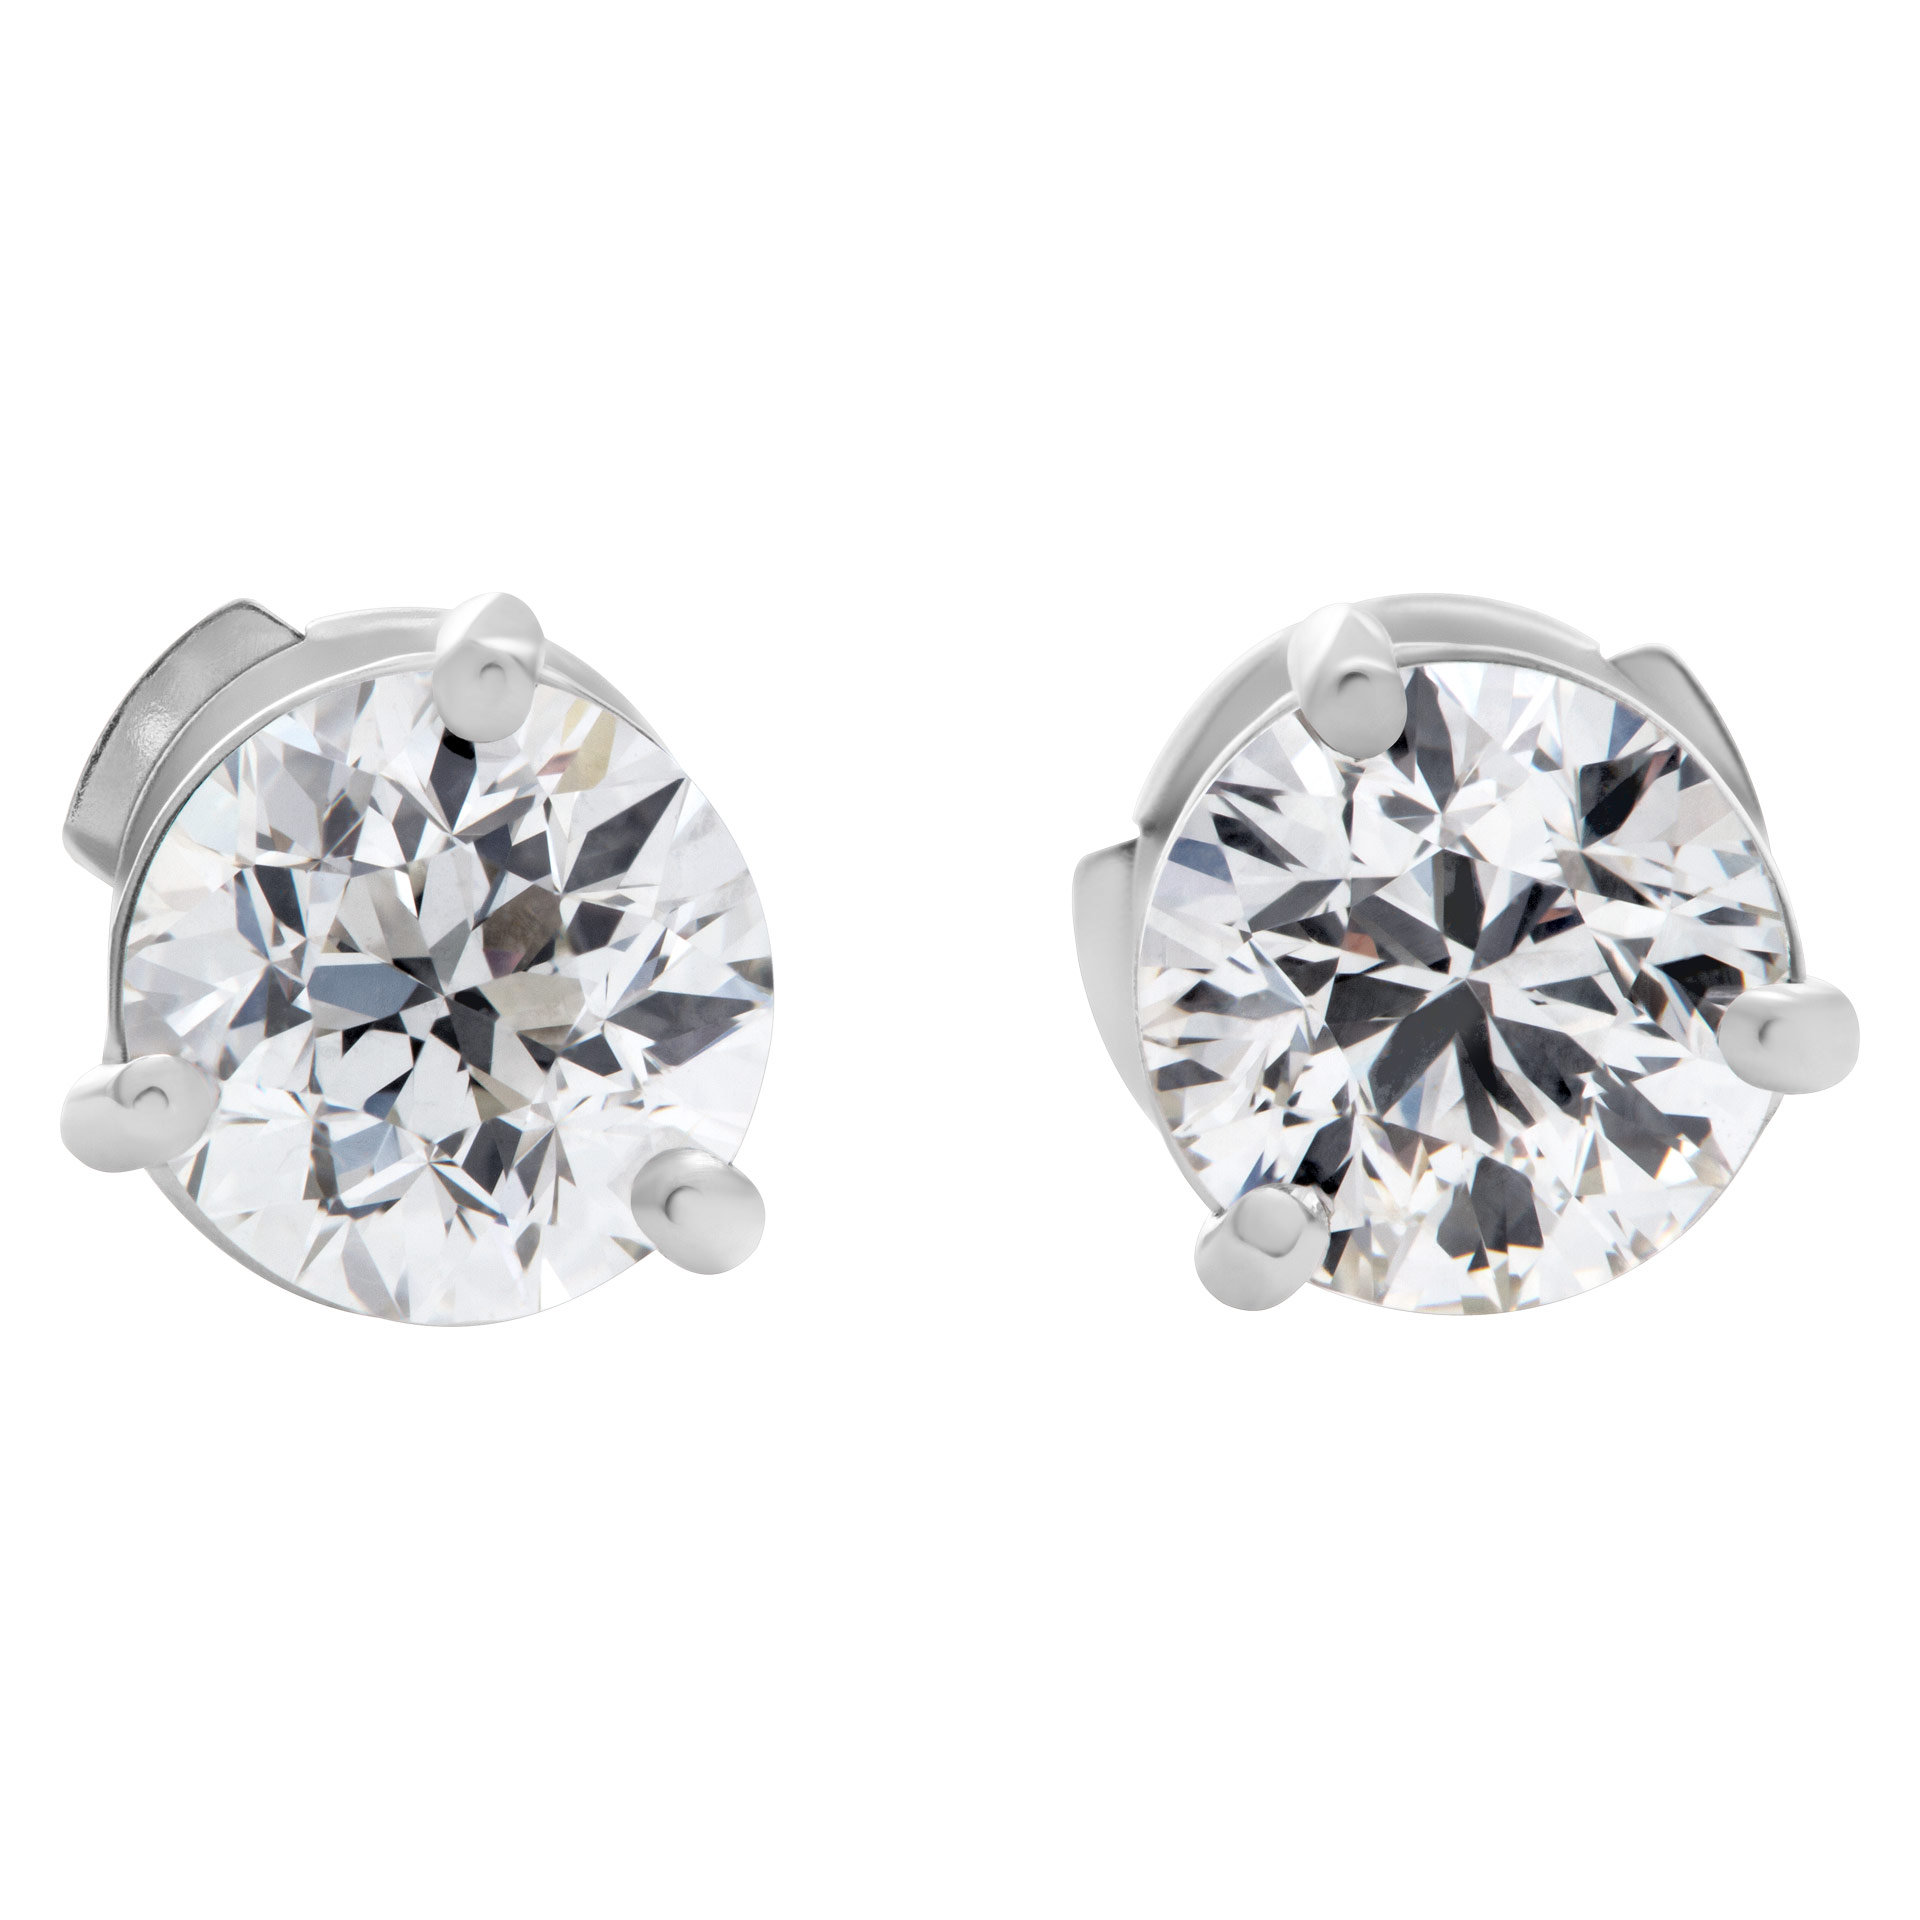 GIA certified diamond studs 1 carat (J color, VVS clarity) and 1.01 carat (J color, VVS2 clarity) set in 18k white gold martini settings image 1